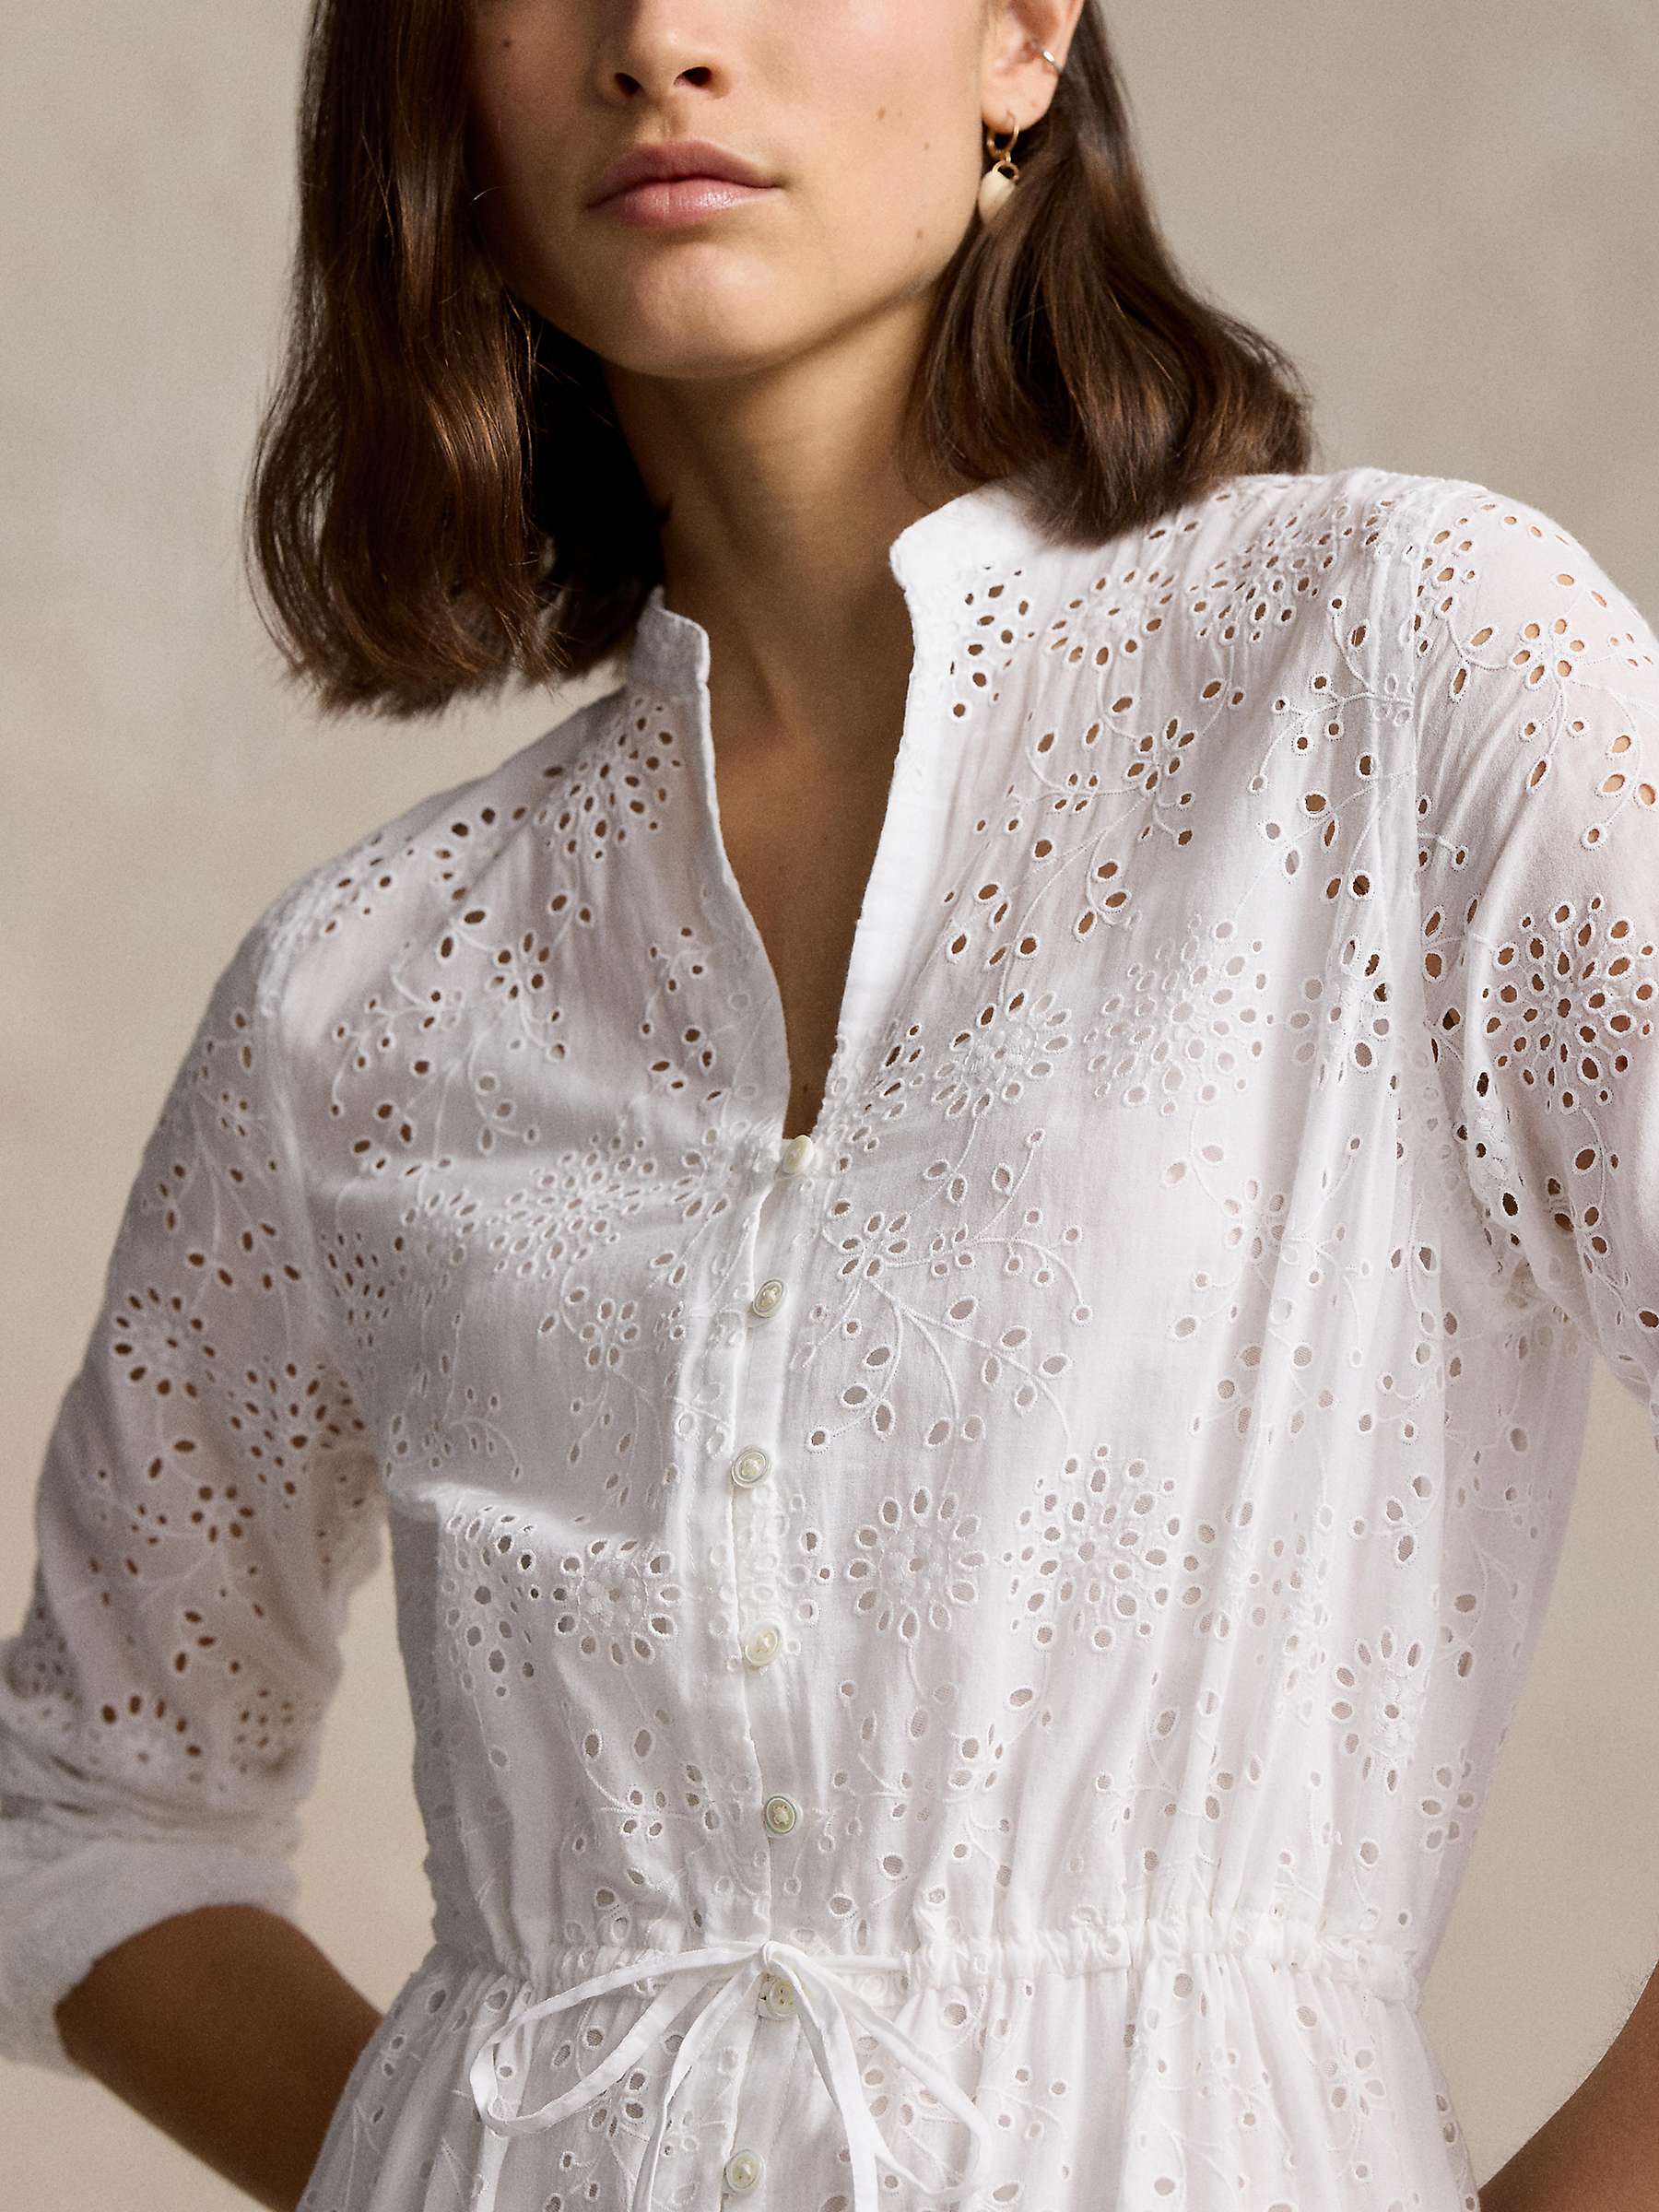 Buy Polo Ralph Lauren Eyelet Maxi Shirt Dress, White Online at johnlewis.com